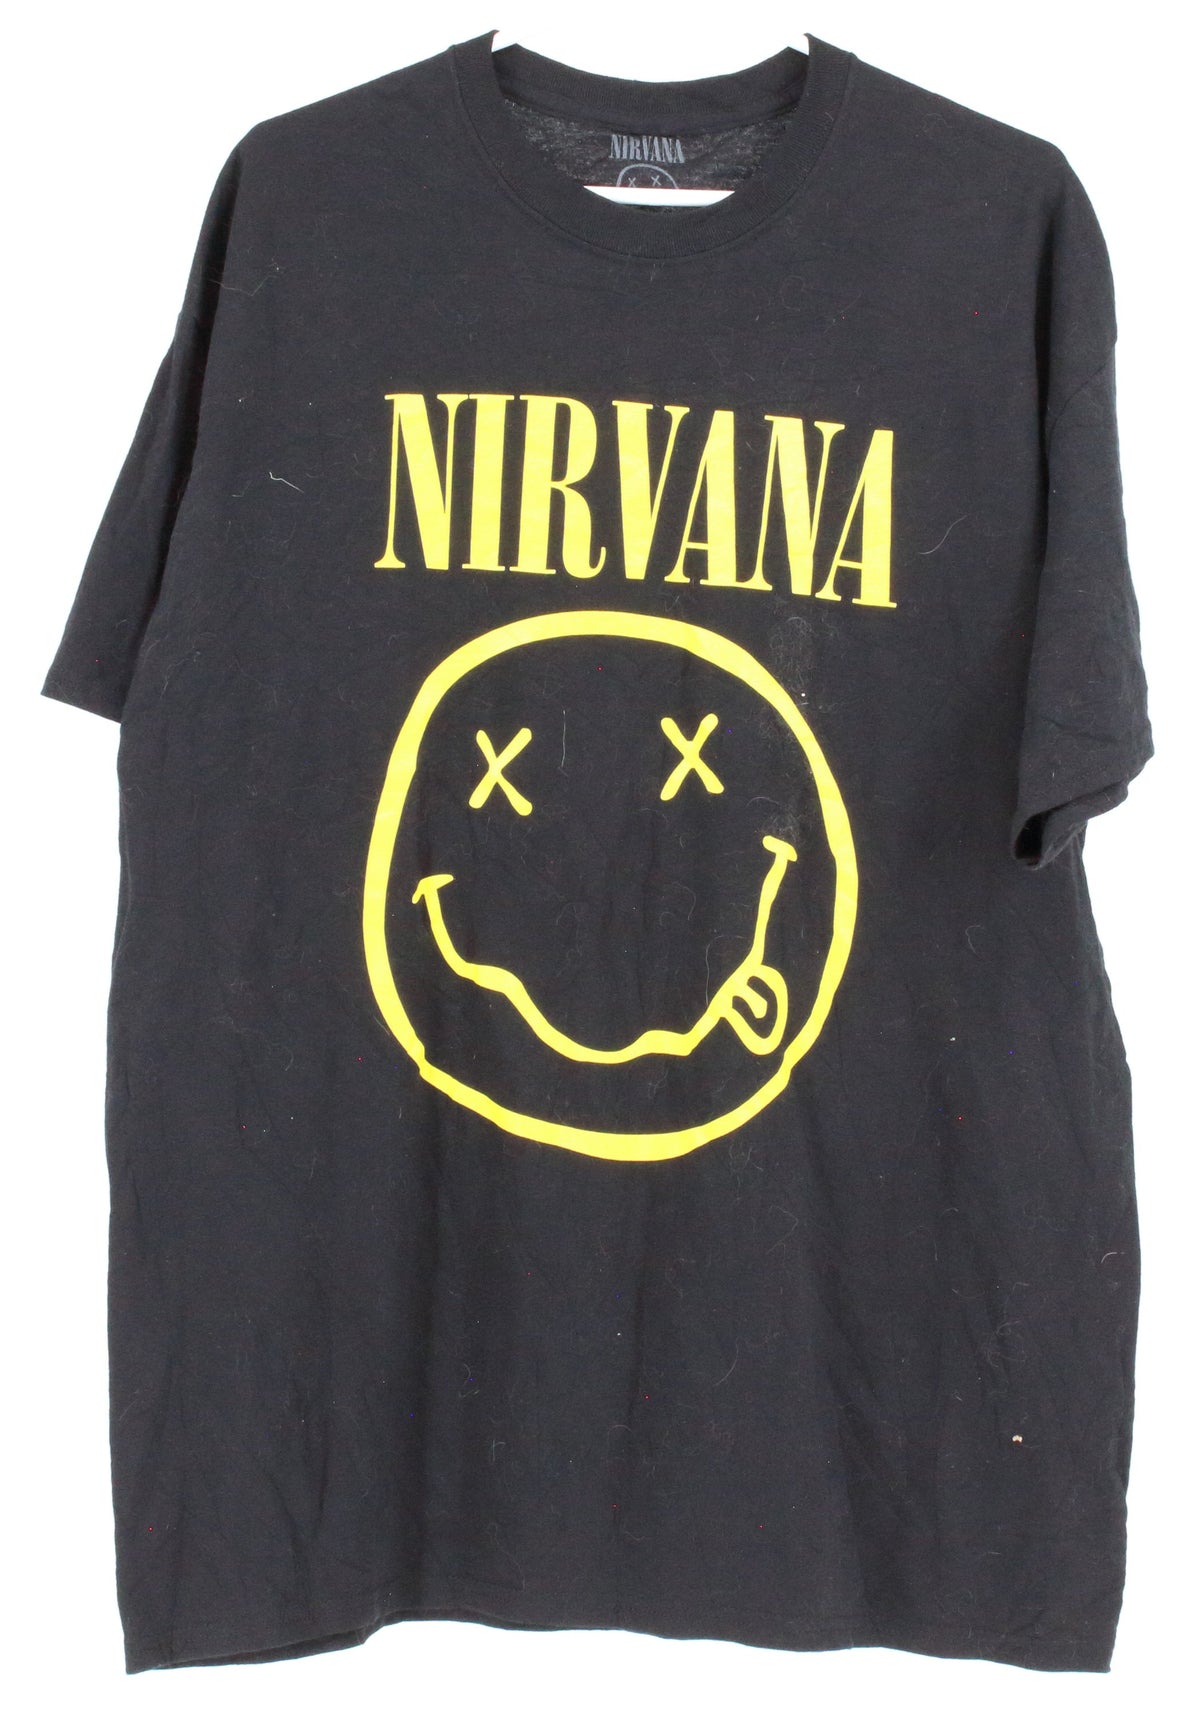 Nirvana Black and Yellow Frong Graphic Band Tee